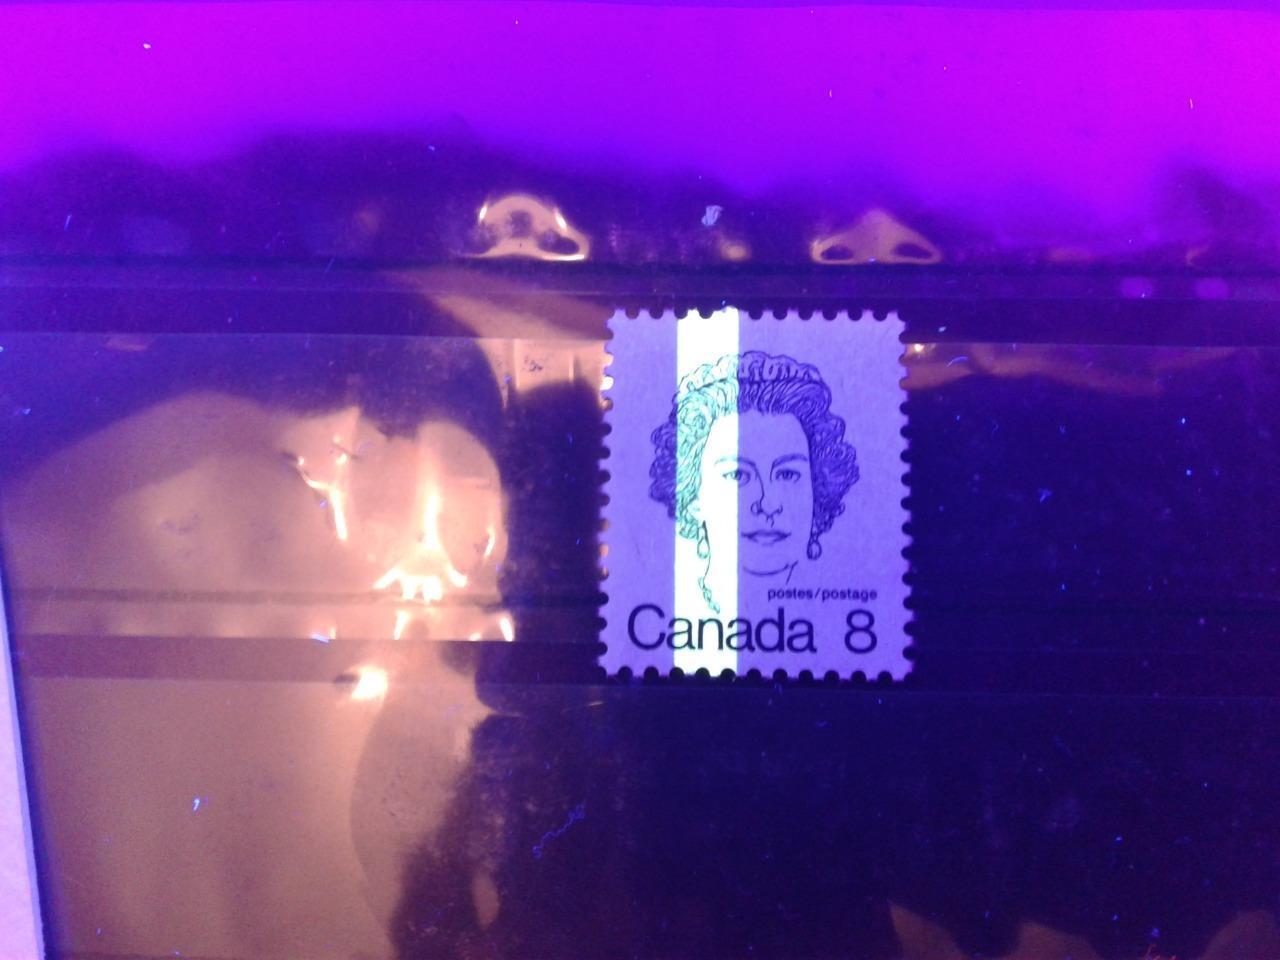 Canada #593iii (SG#700) 8c Ultramarine Queen Elizabeth II 1972-1978 Caricature Issue 1 Dots To Left of Tiara VF-75 NH Brixton Chrome 